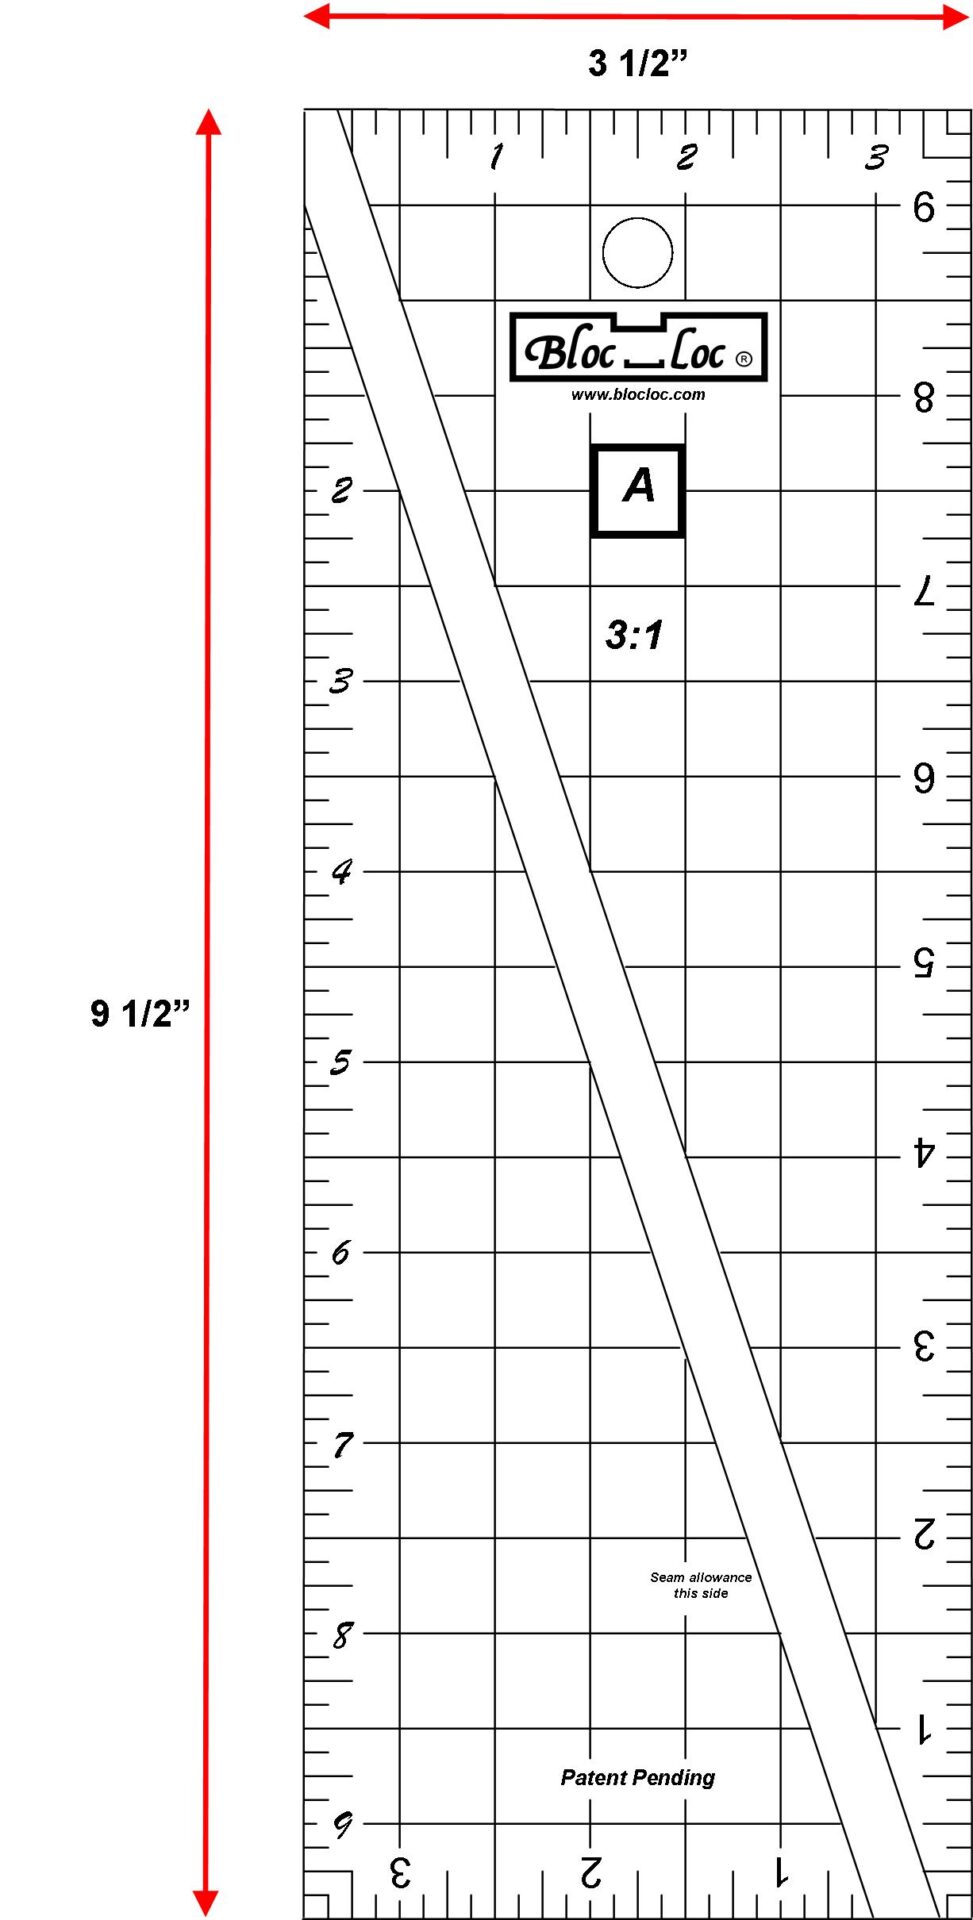 Bloc Loc Half Rectangle Triangle HRT Mini Ruler Set 2:1 Ratio 2.5 X 4.5 